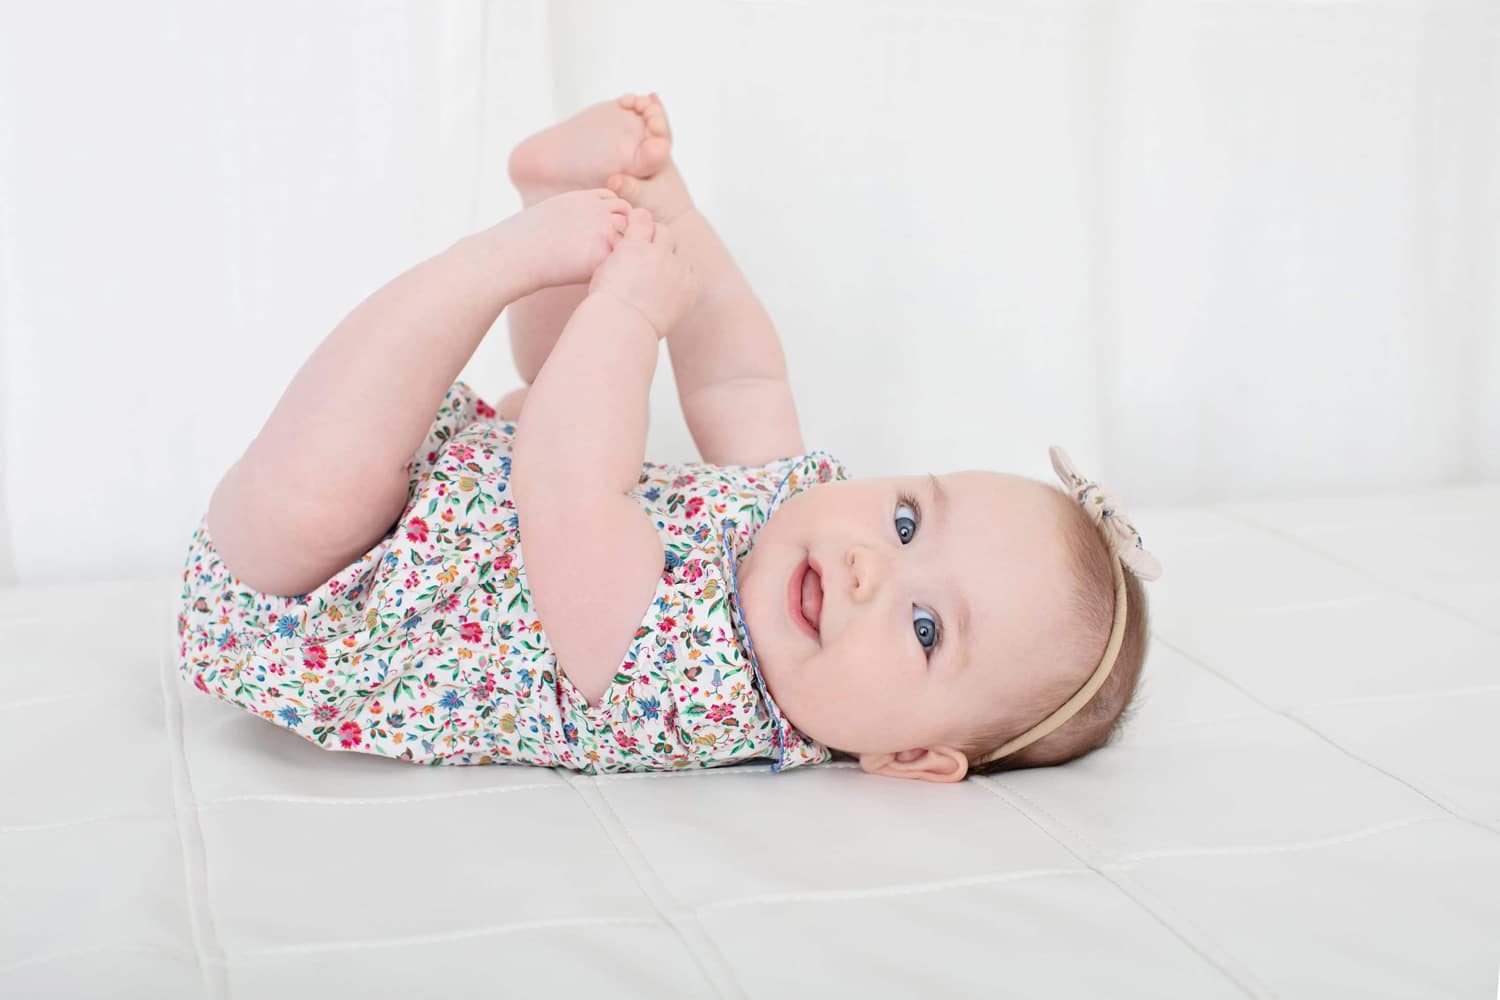 A baby grabs her feet in a minimalist newborn photo.